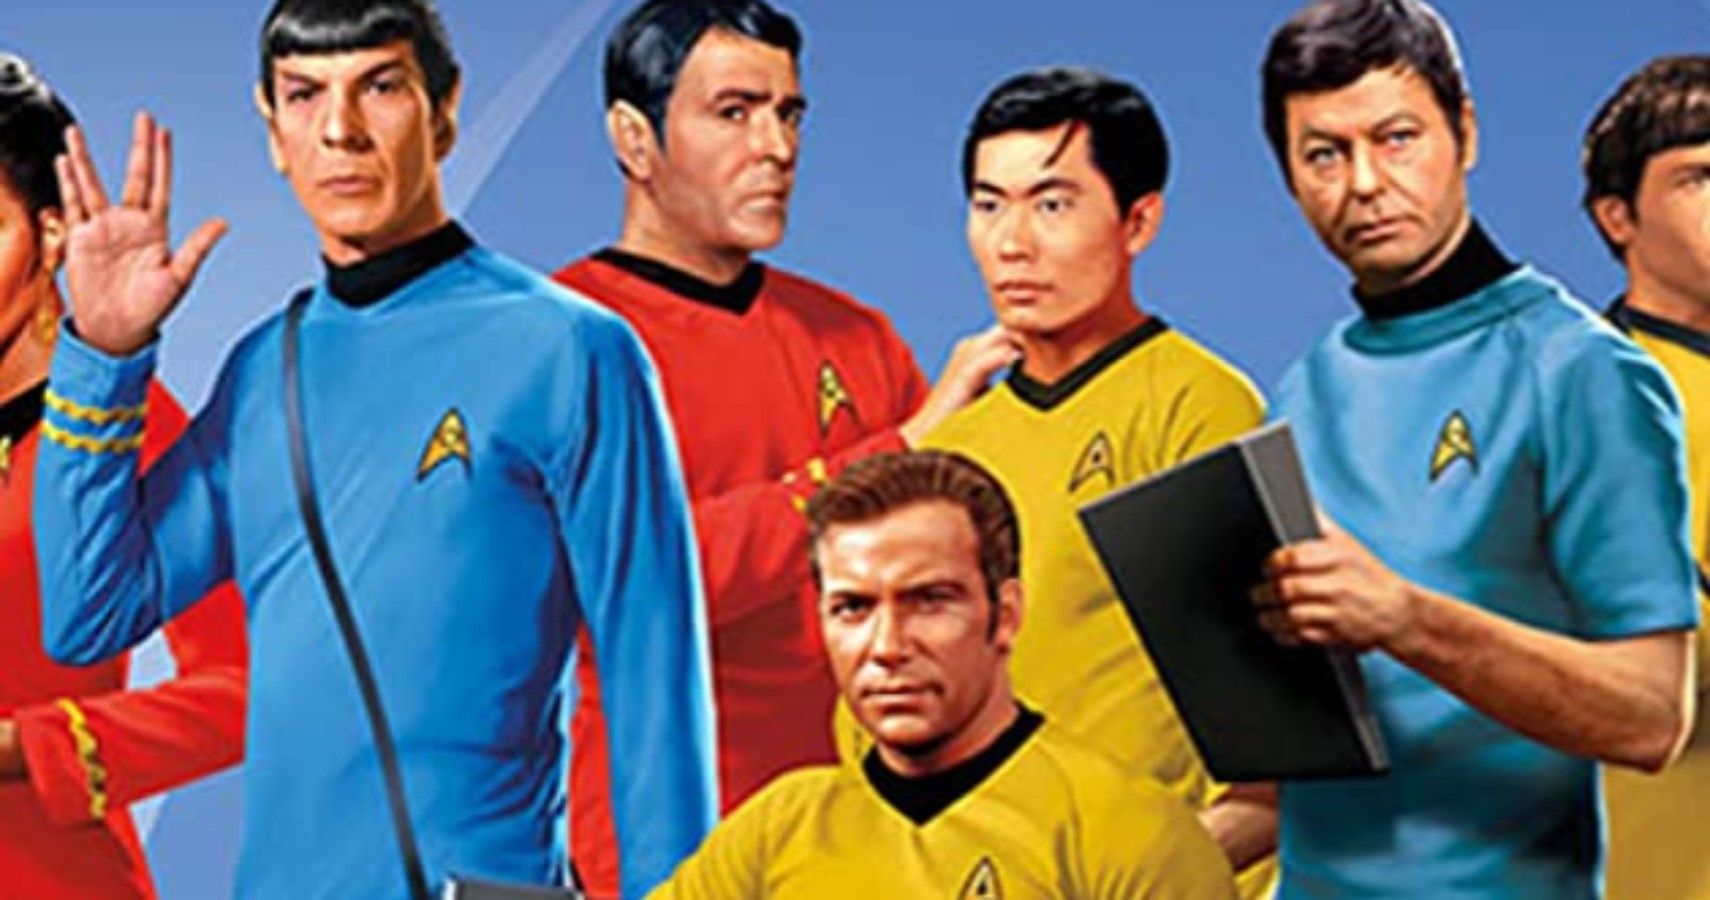 Top Rated Star Trek TOS Episodes According To IMDb